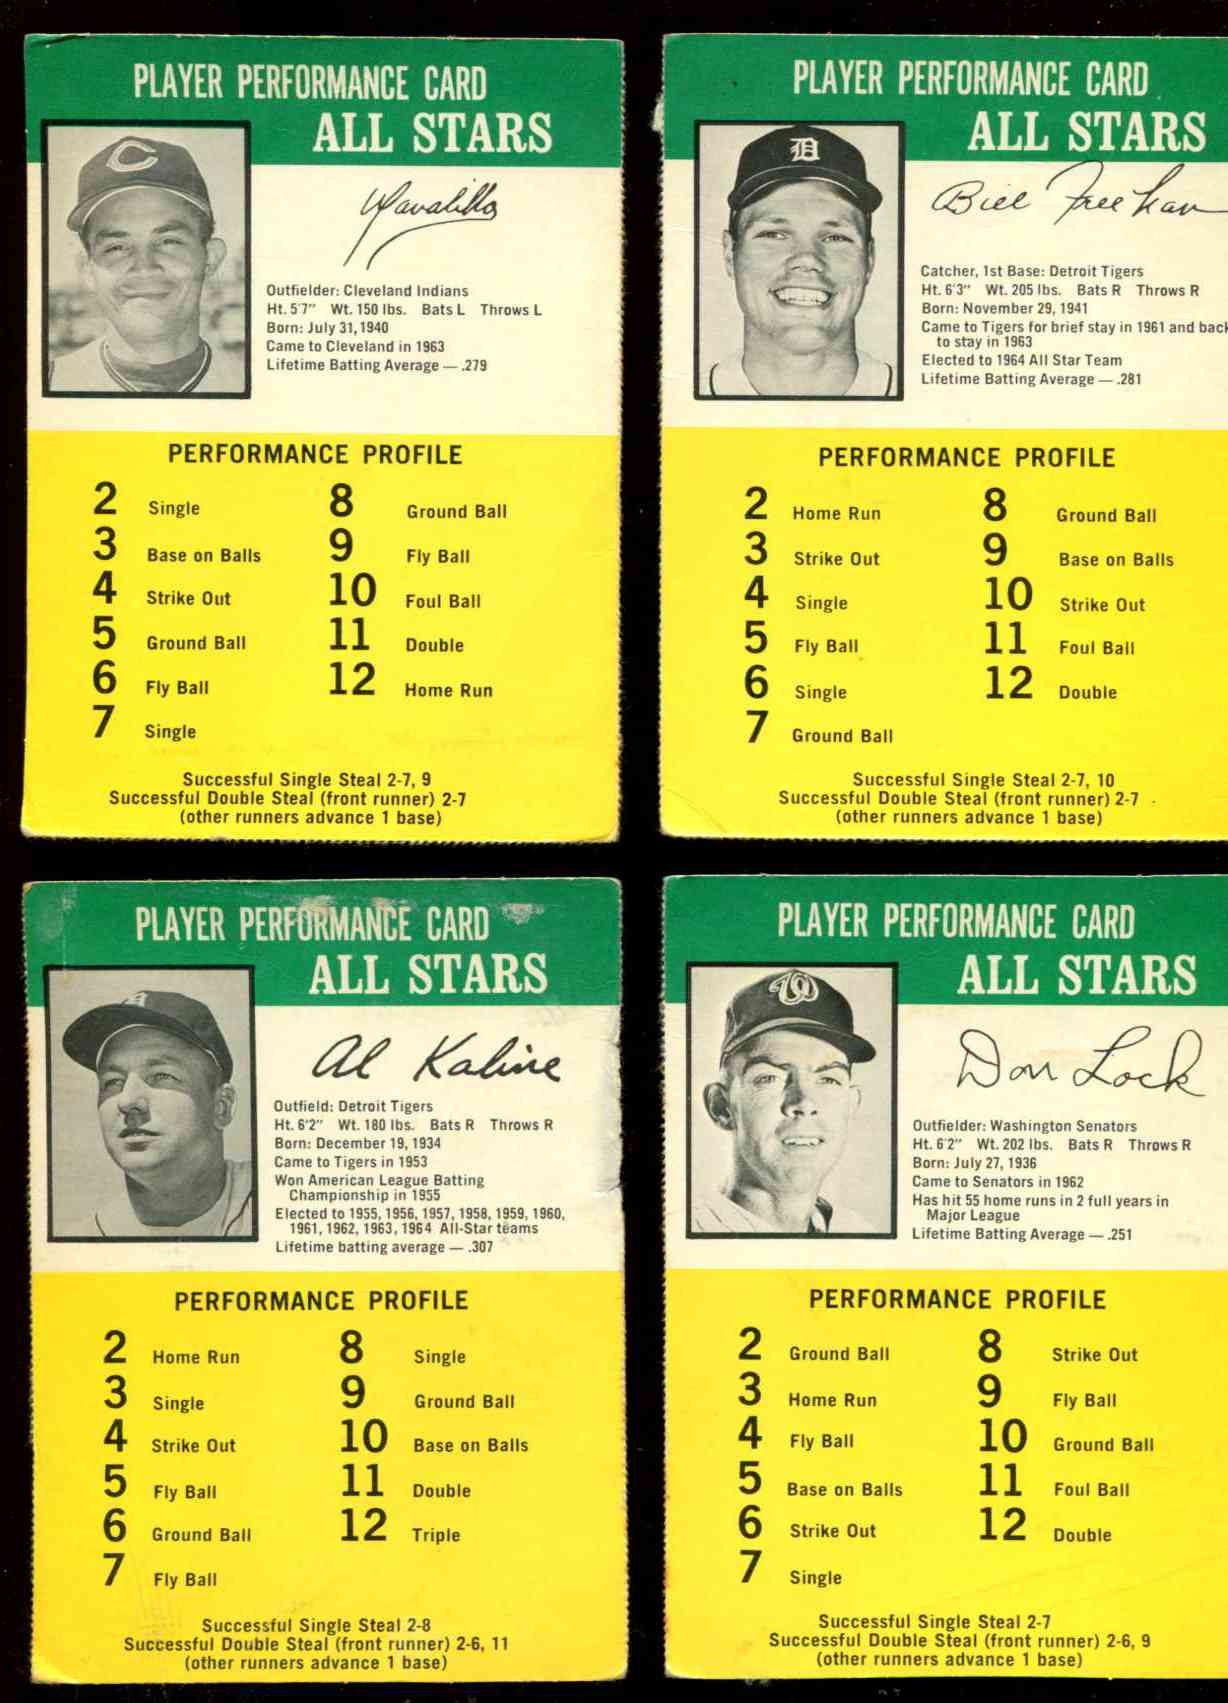 1965 Challenge the Yankees #32 Al Kaline [.307] (Tigers) Baseball cards value